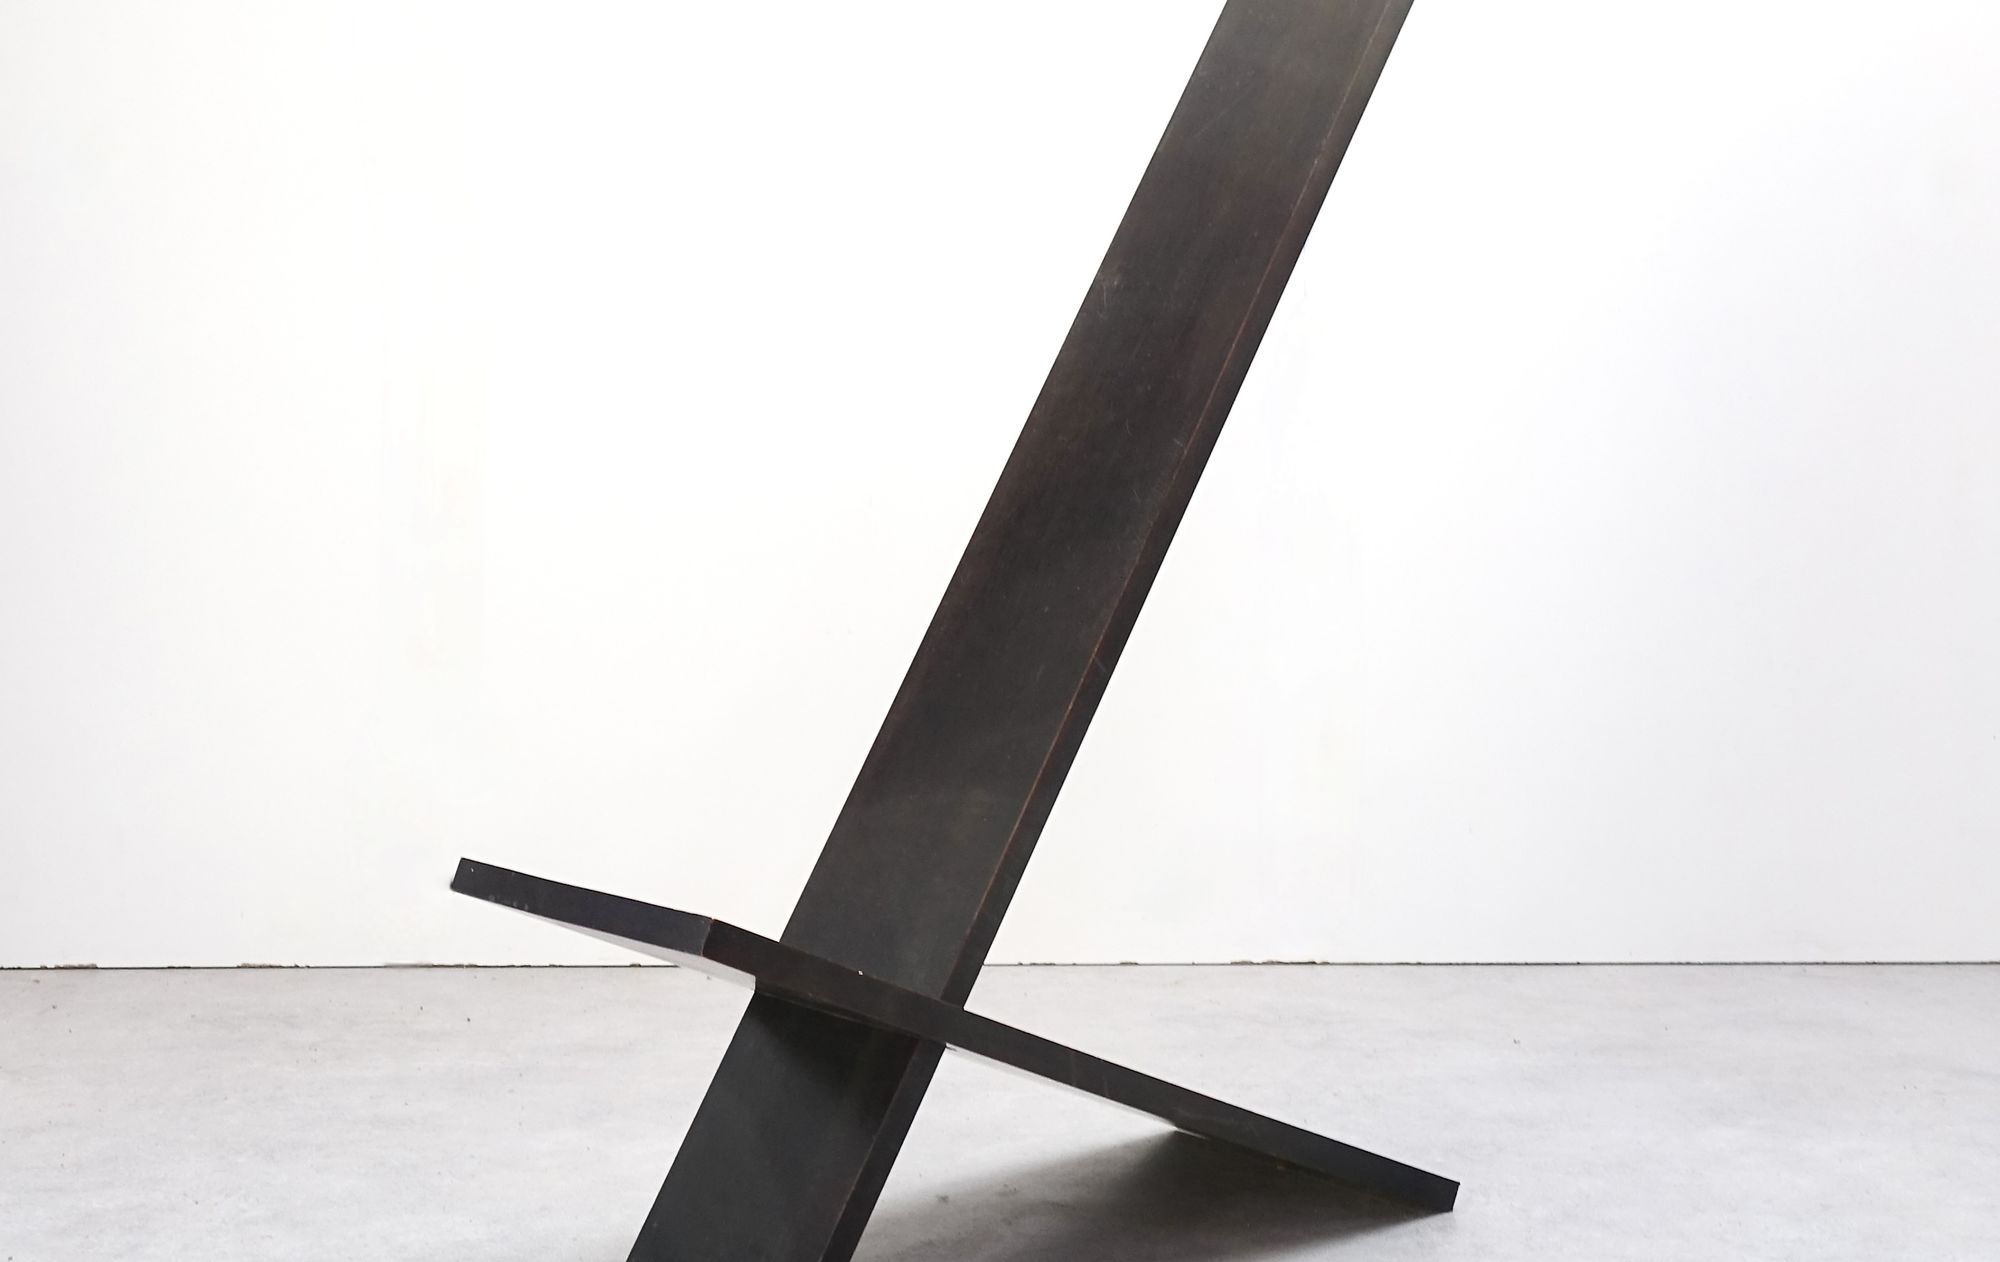 Minimalist chair by English designer De Graaff